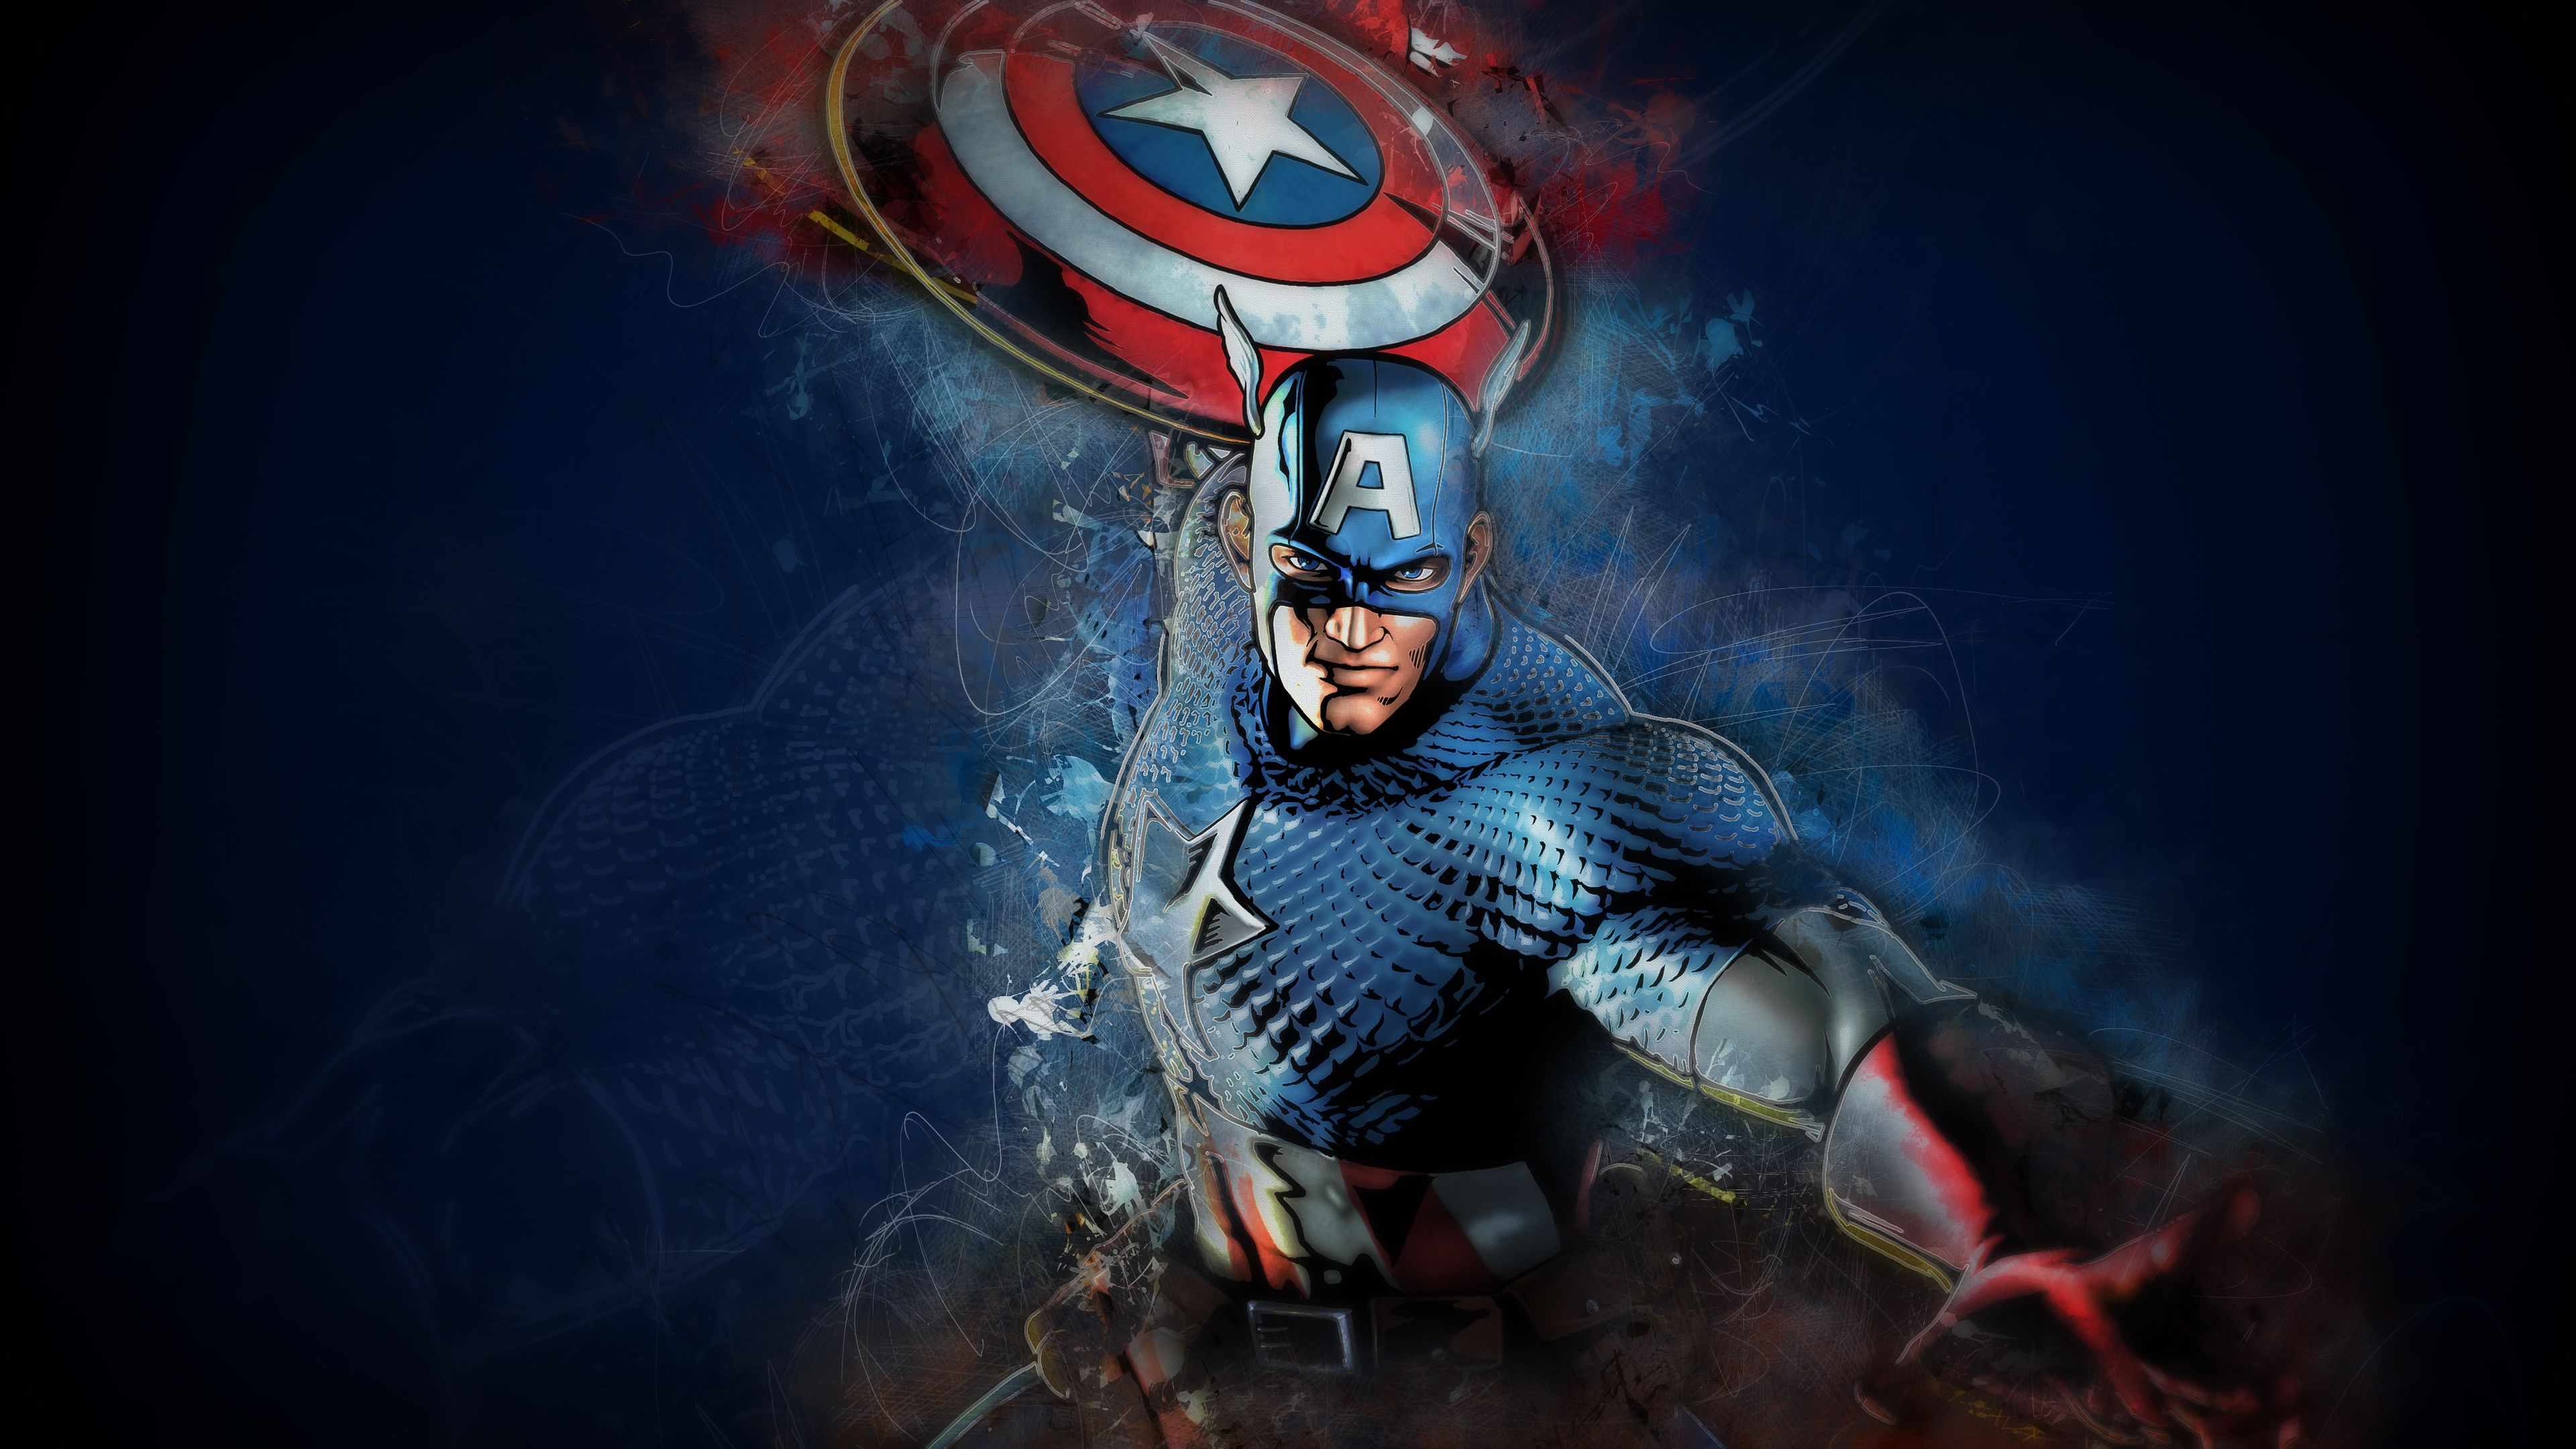 Free download Captain America 4k Ultra HD Wallpaper Background